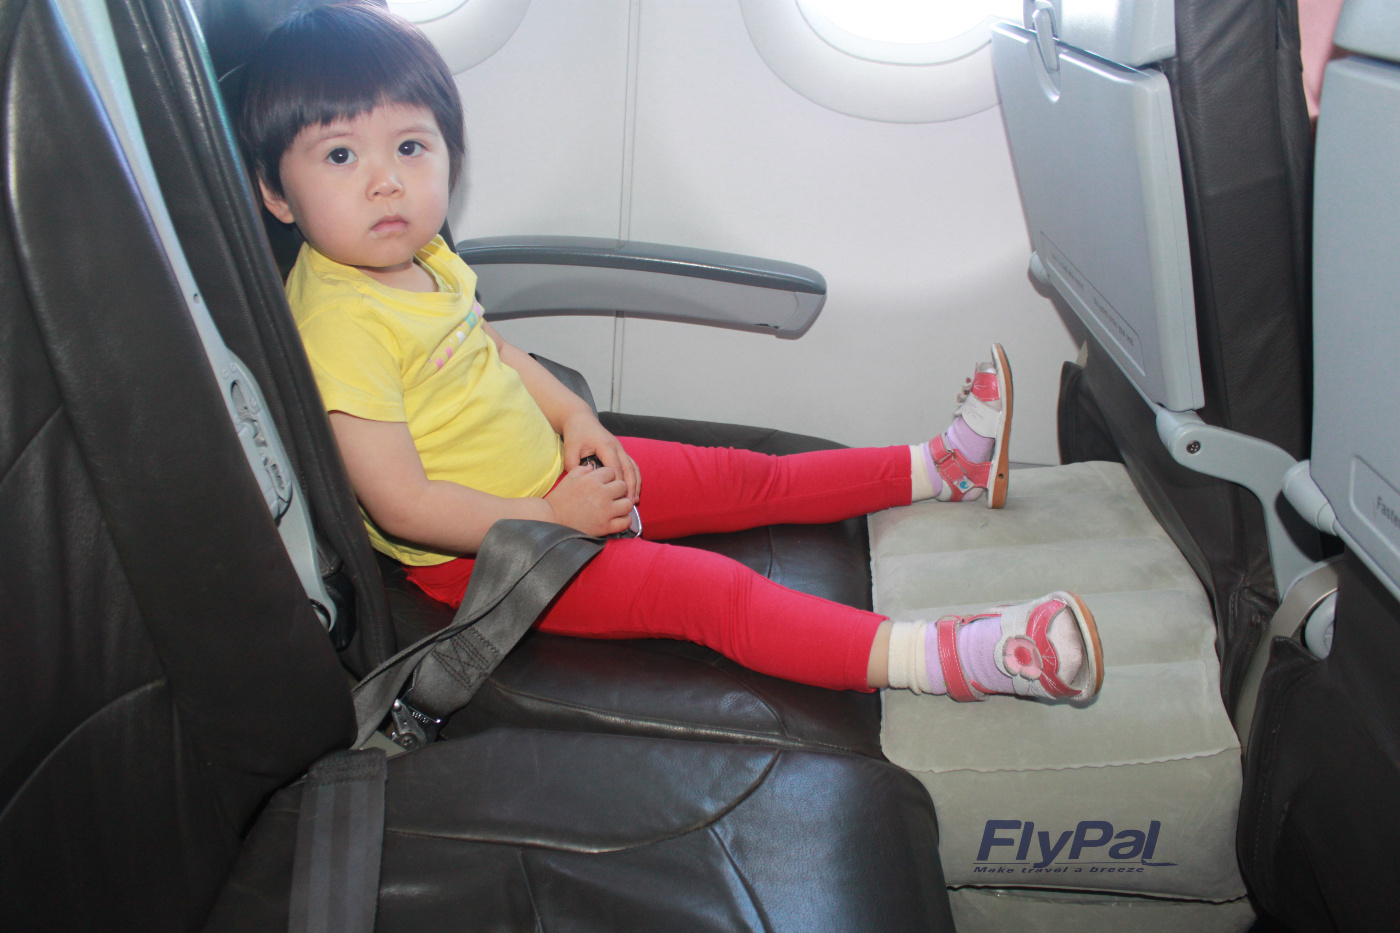 https://www.flypalonline.com/wp-content/uploads/2019/10/Kid-airplane-2.jpg